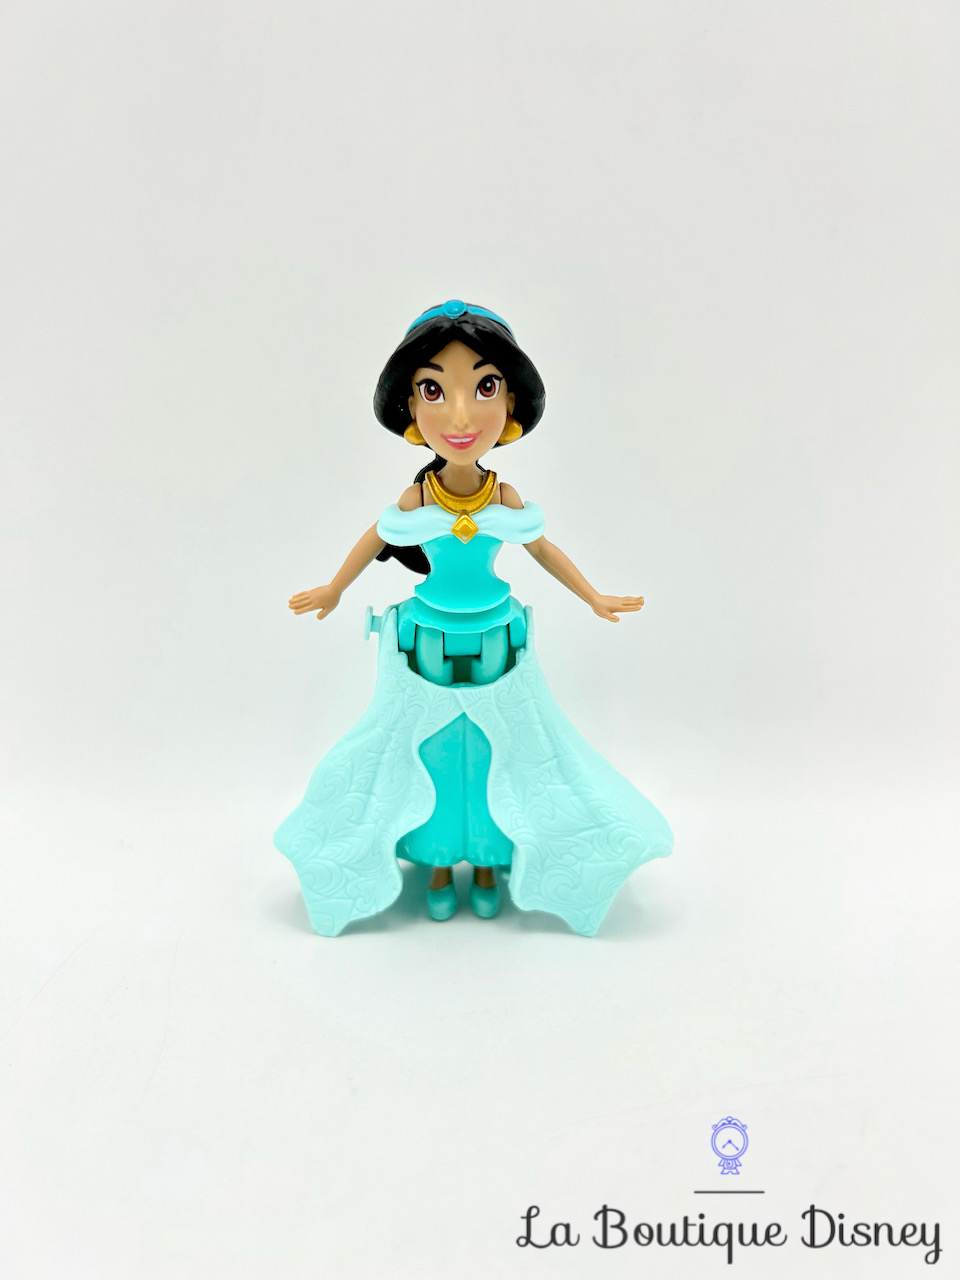 HASBRO Disney Princess - Le château royal pas cher 